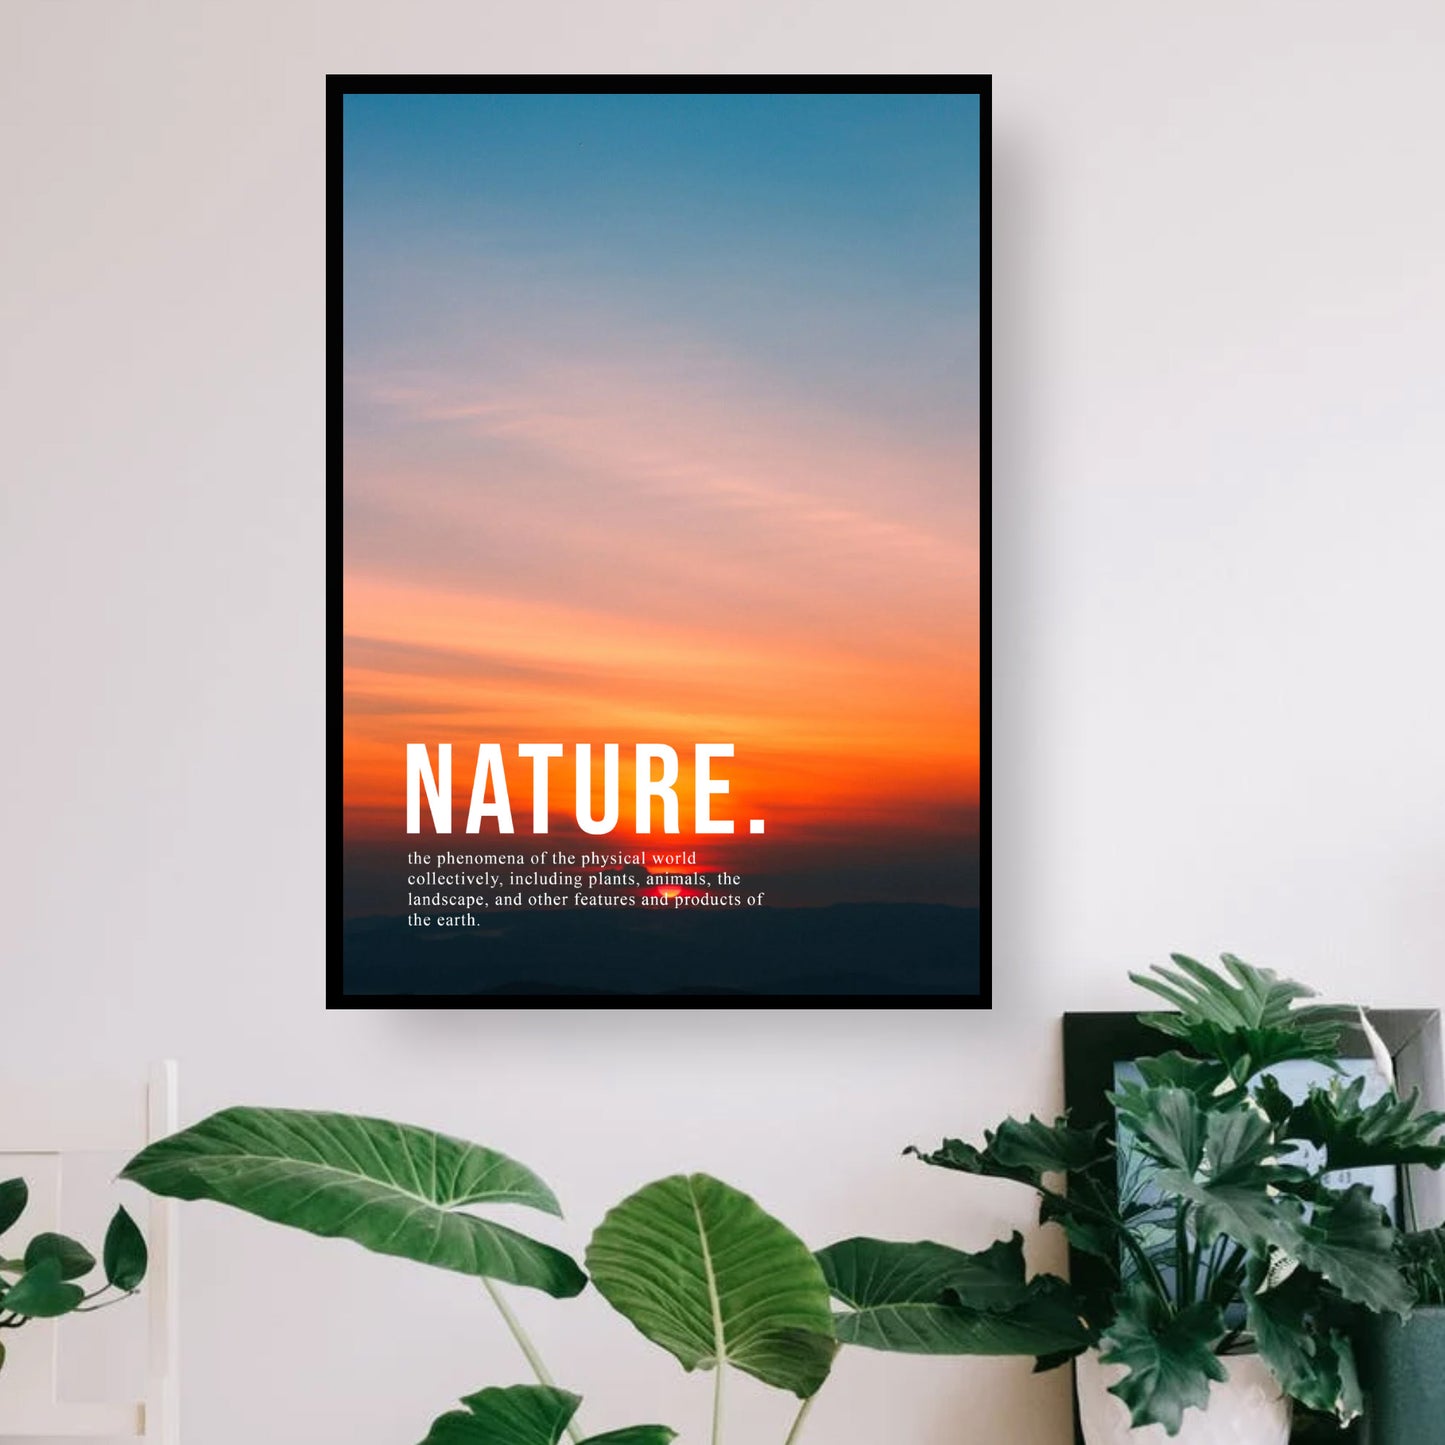 Nature Sunset Artwork Poster Print